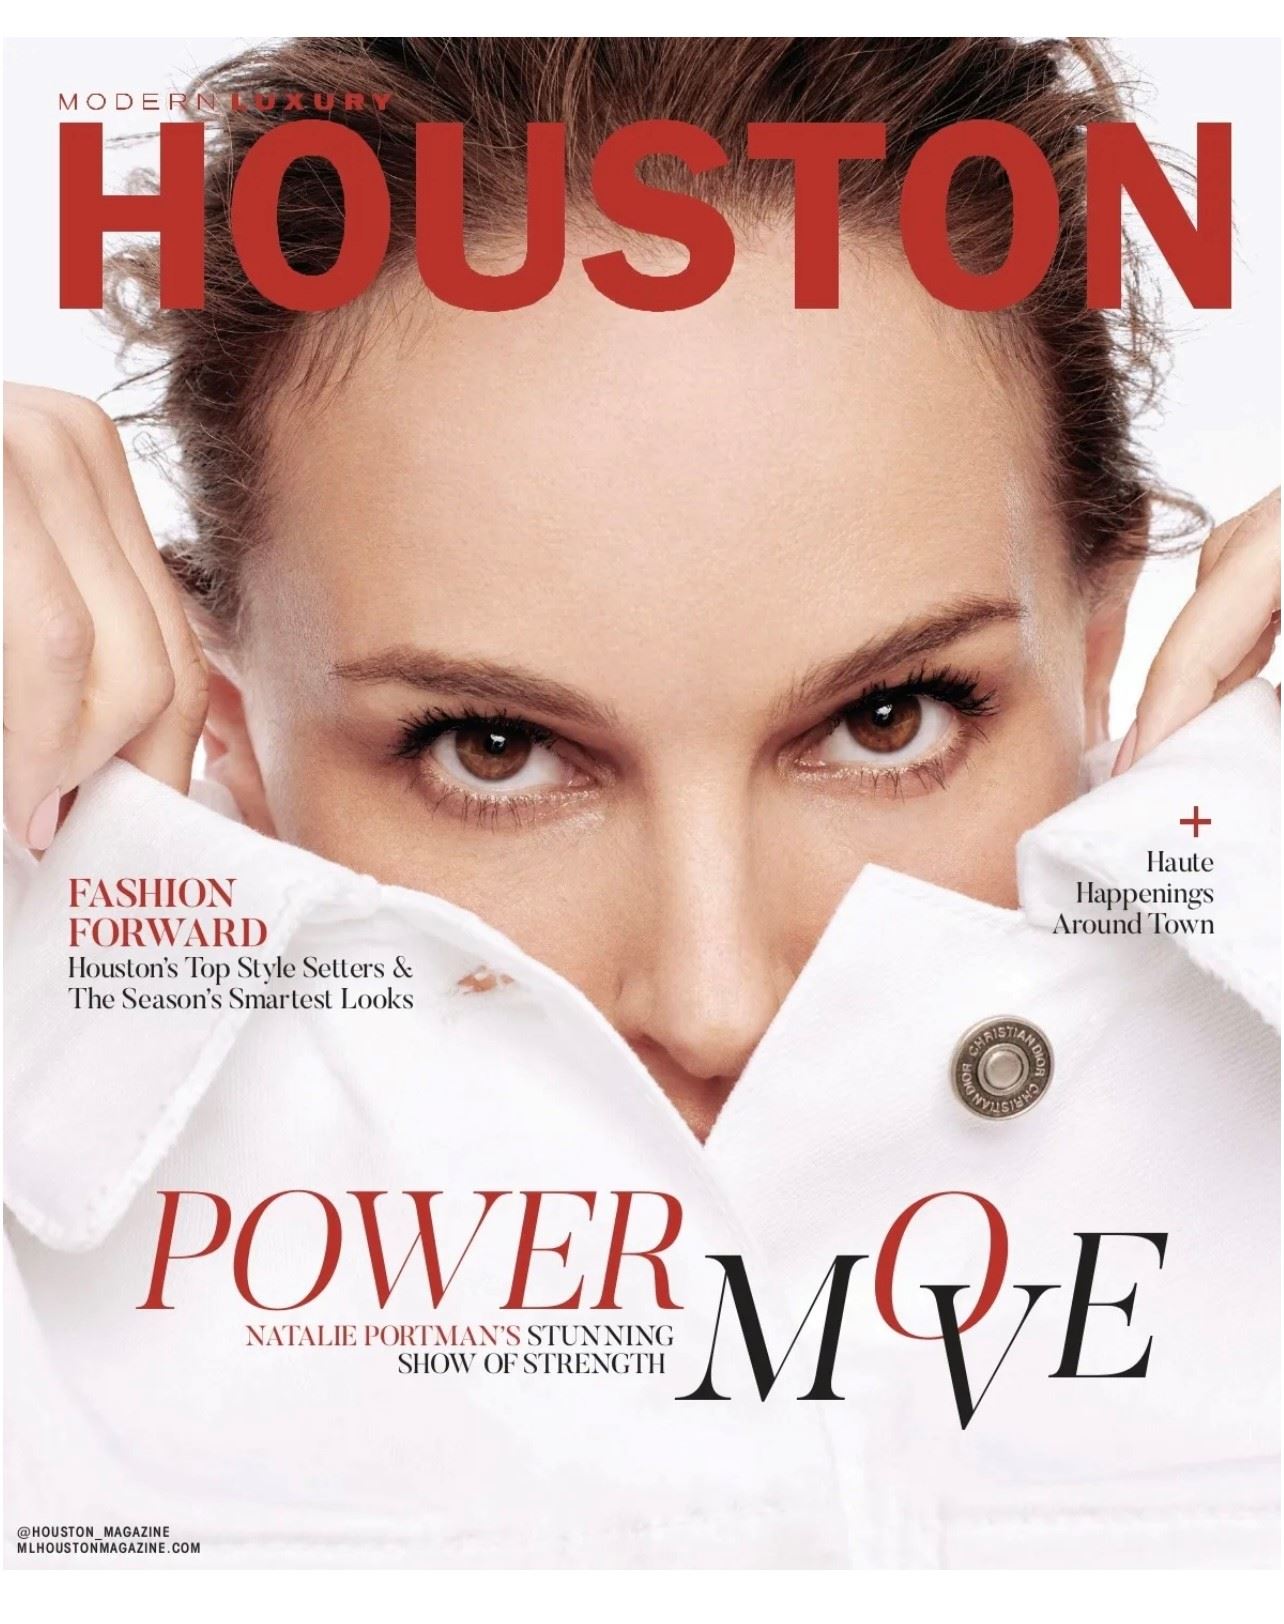 Modern Luxury Houston Magazine Cover